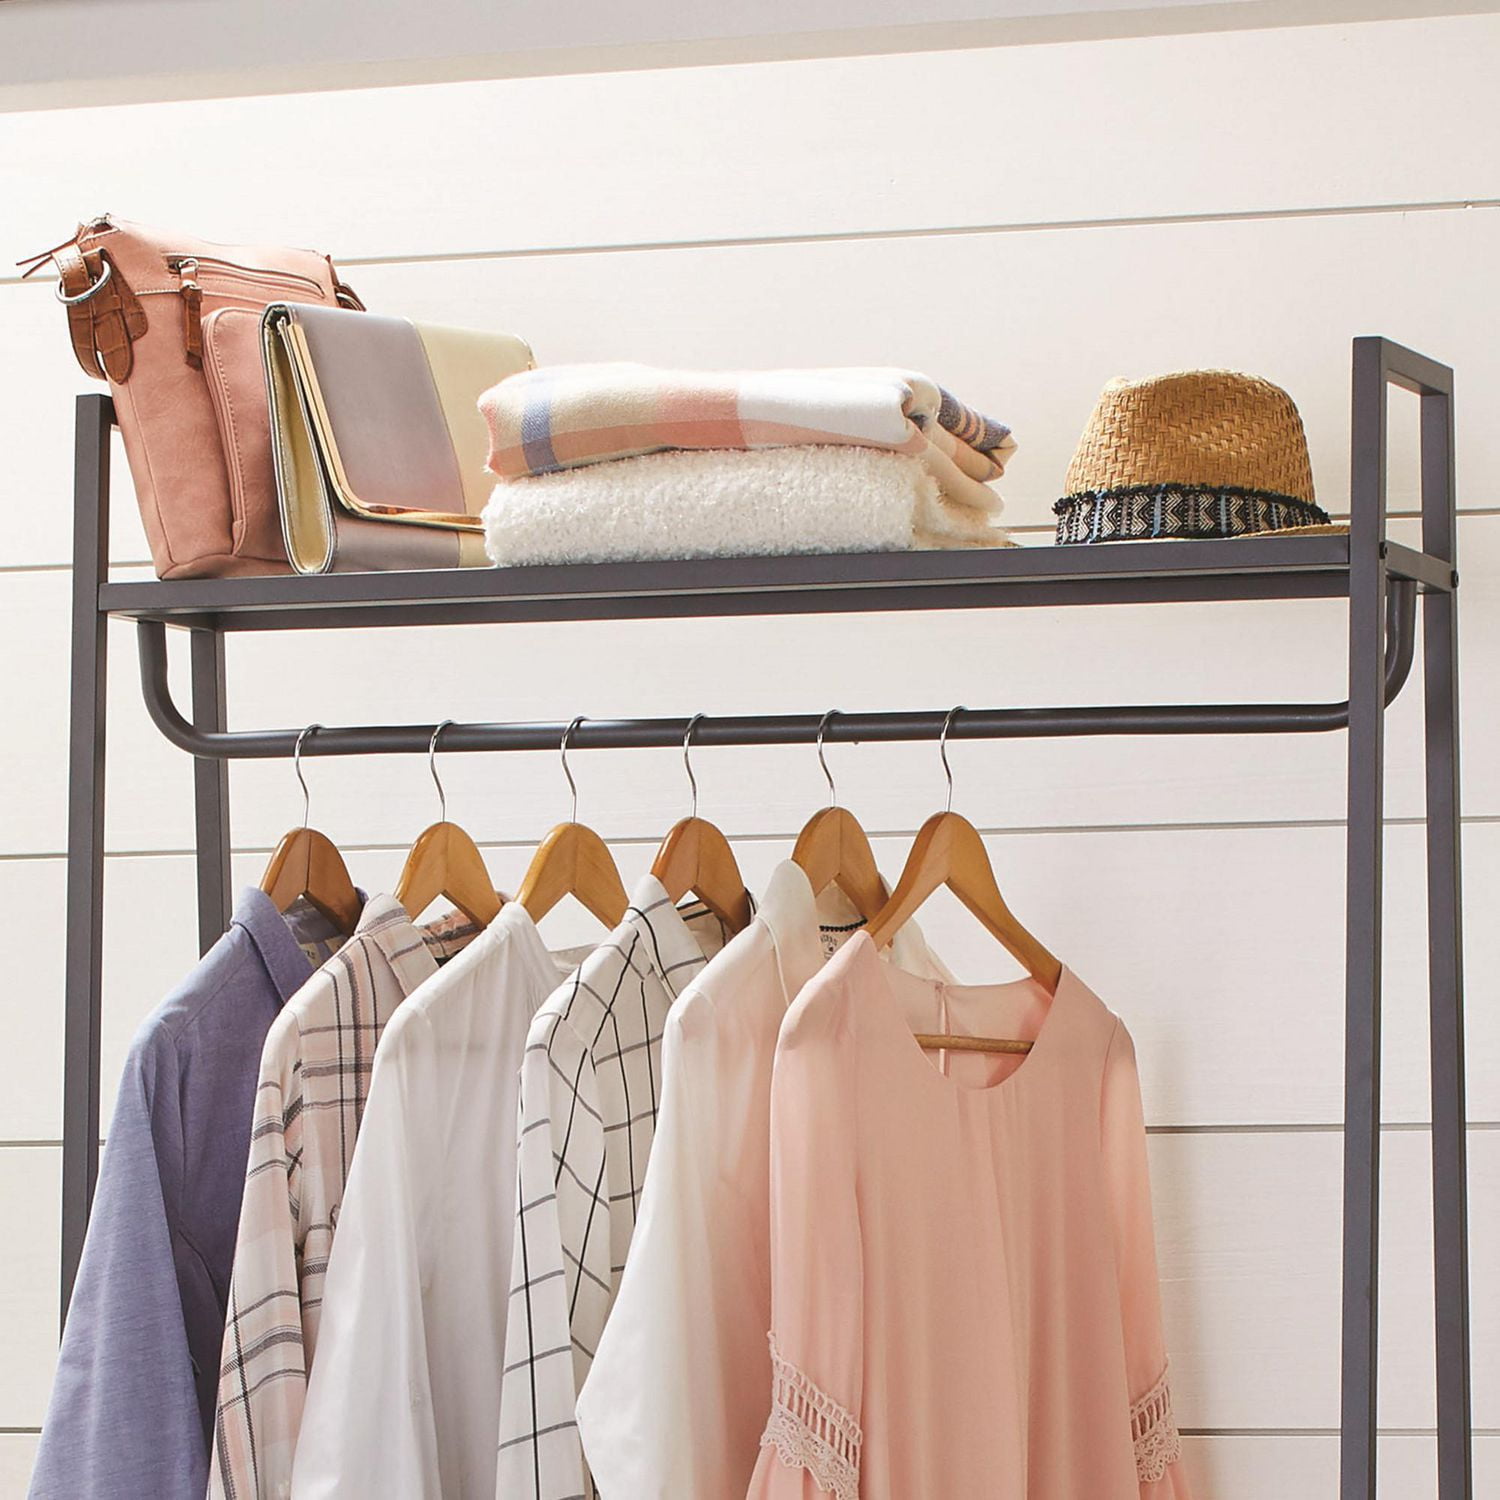 Freestanding Garment Rack Display Stand Clothing Hanger